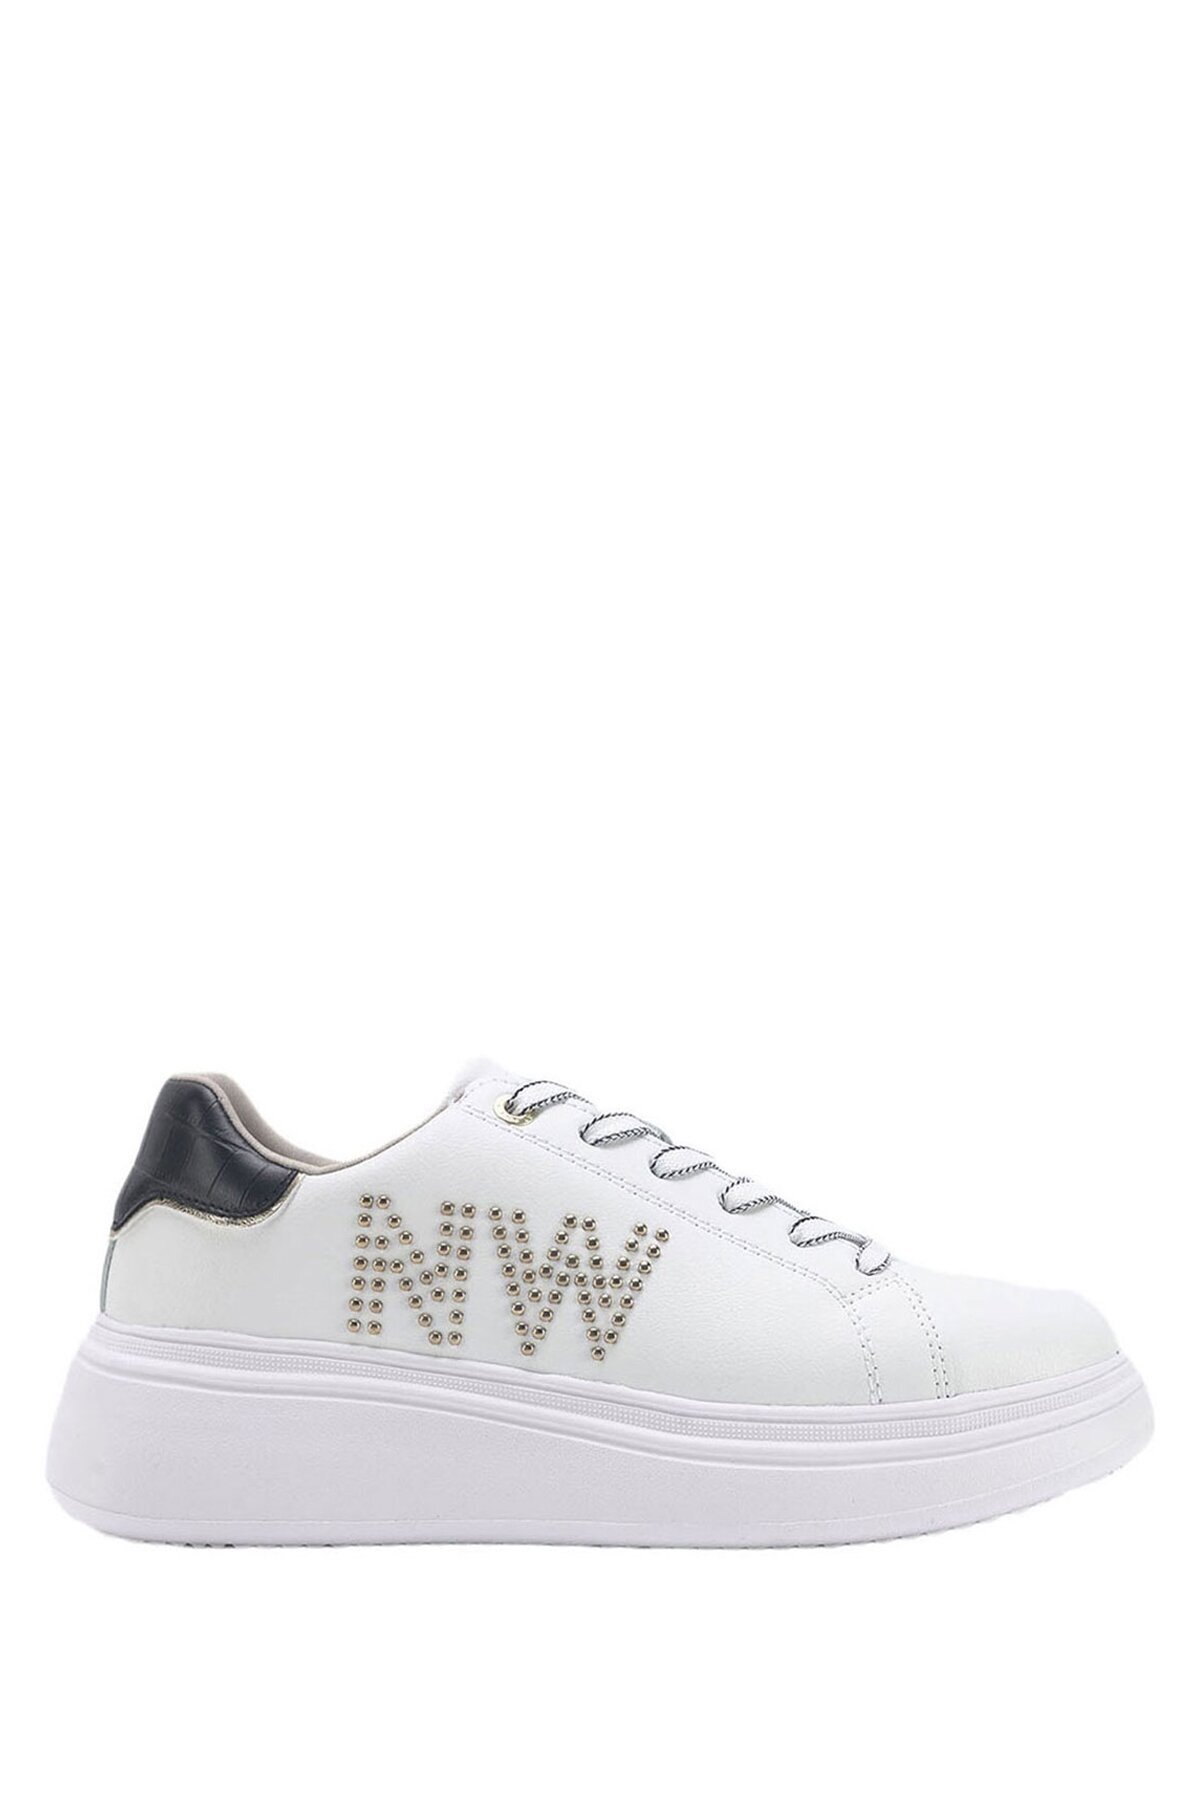 Nine West ACUS 3FX White Women's Sneaker